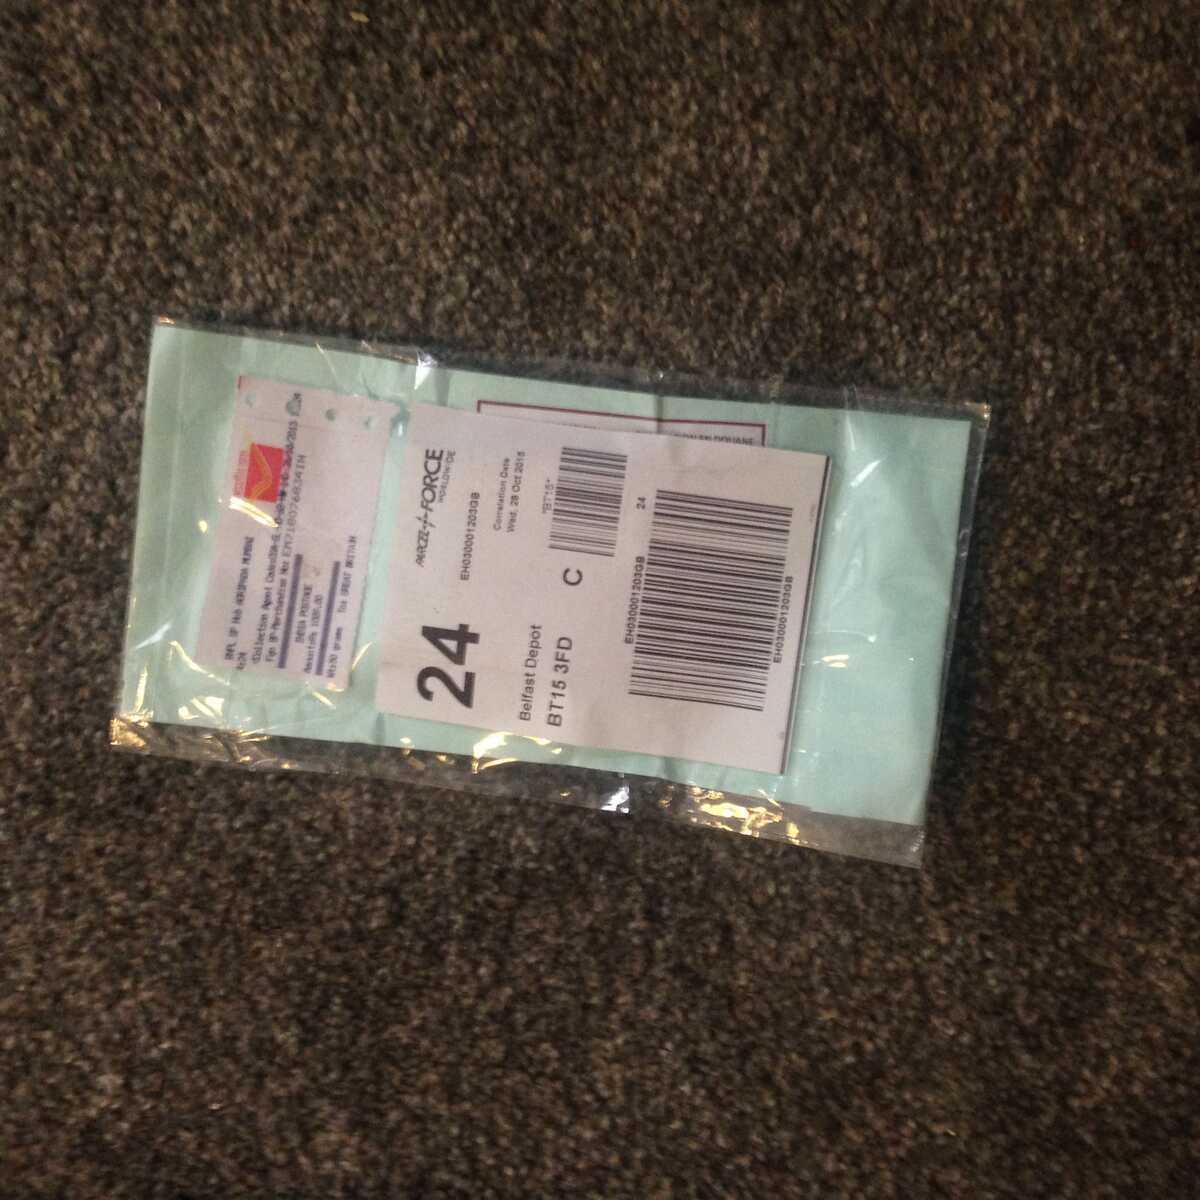 package 1